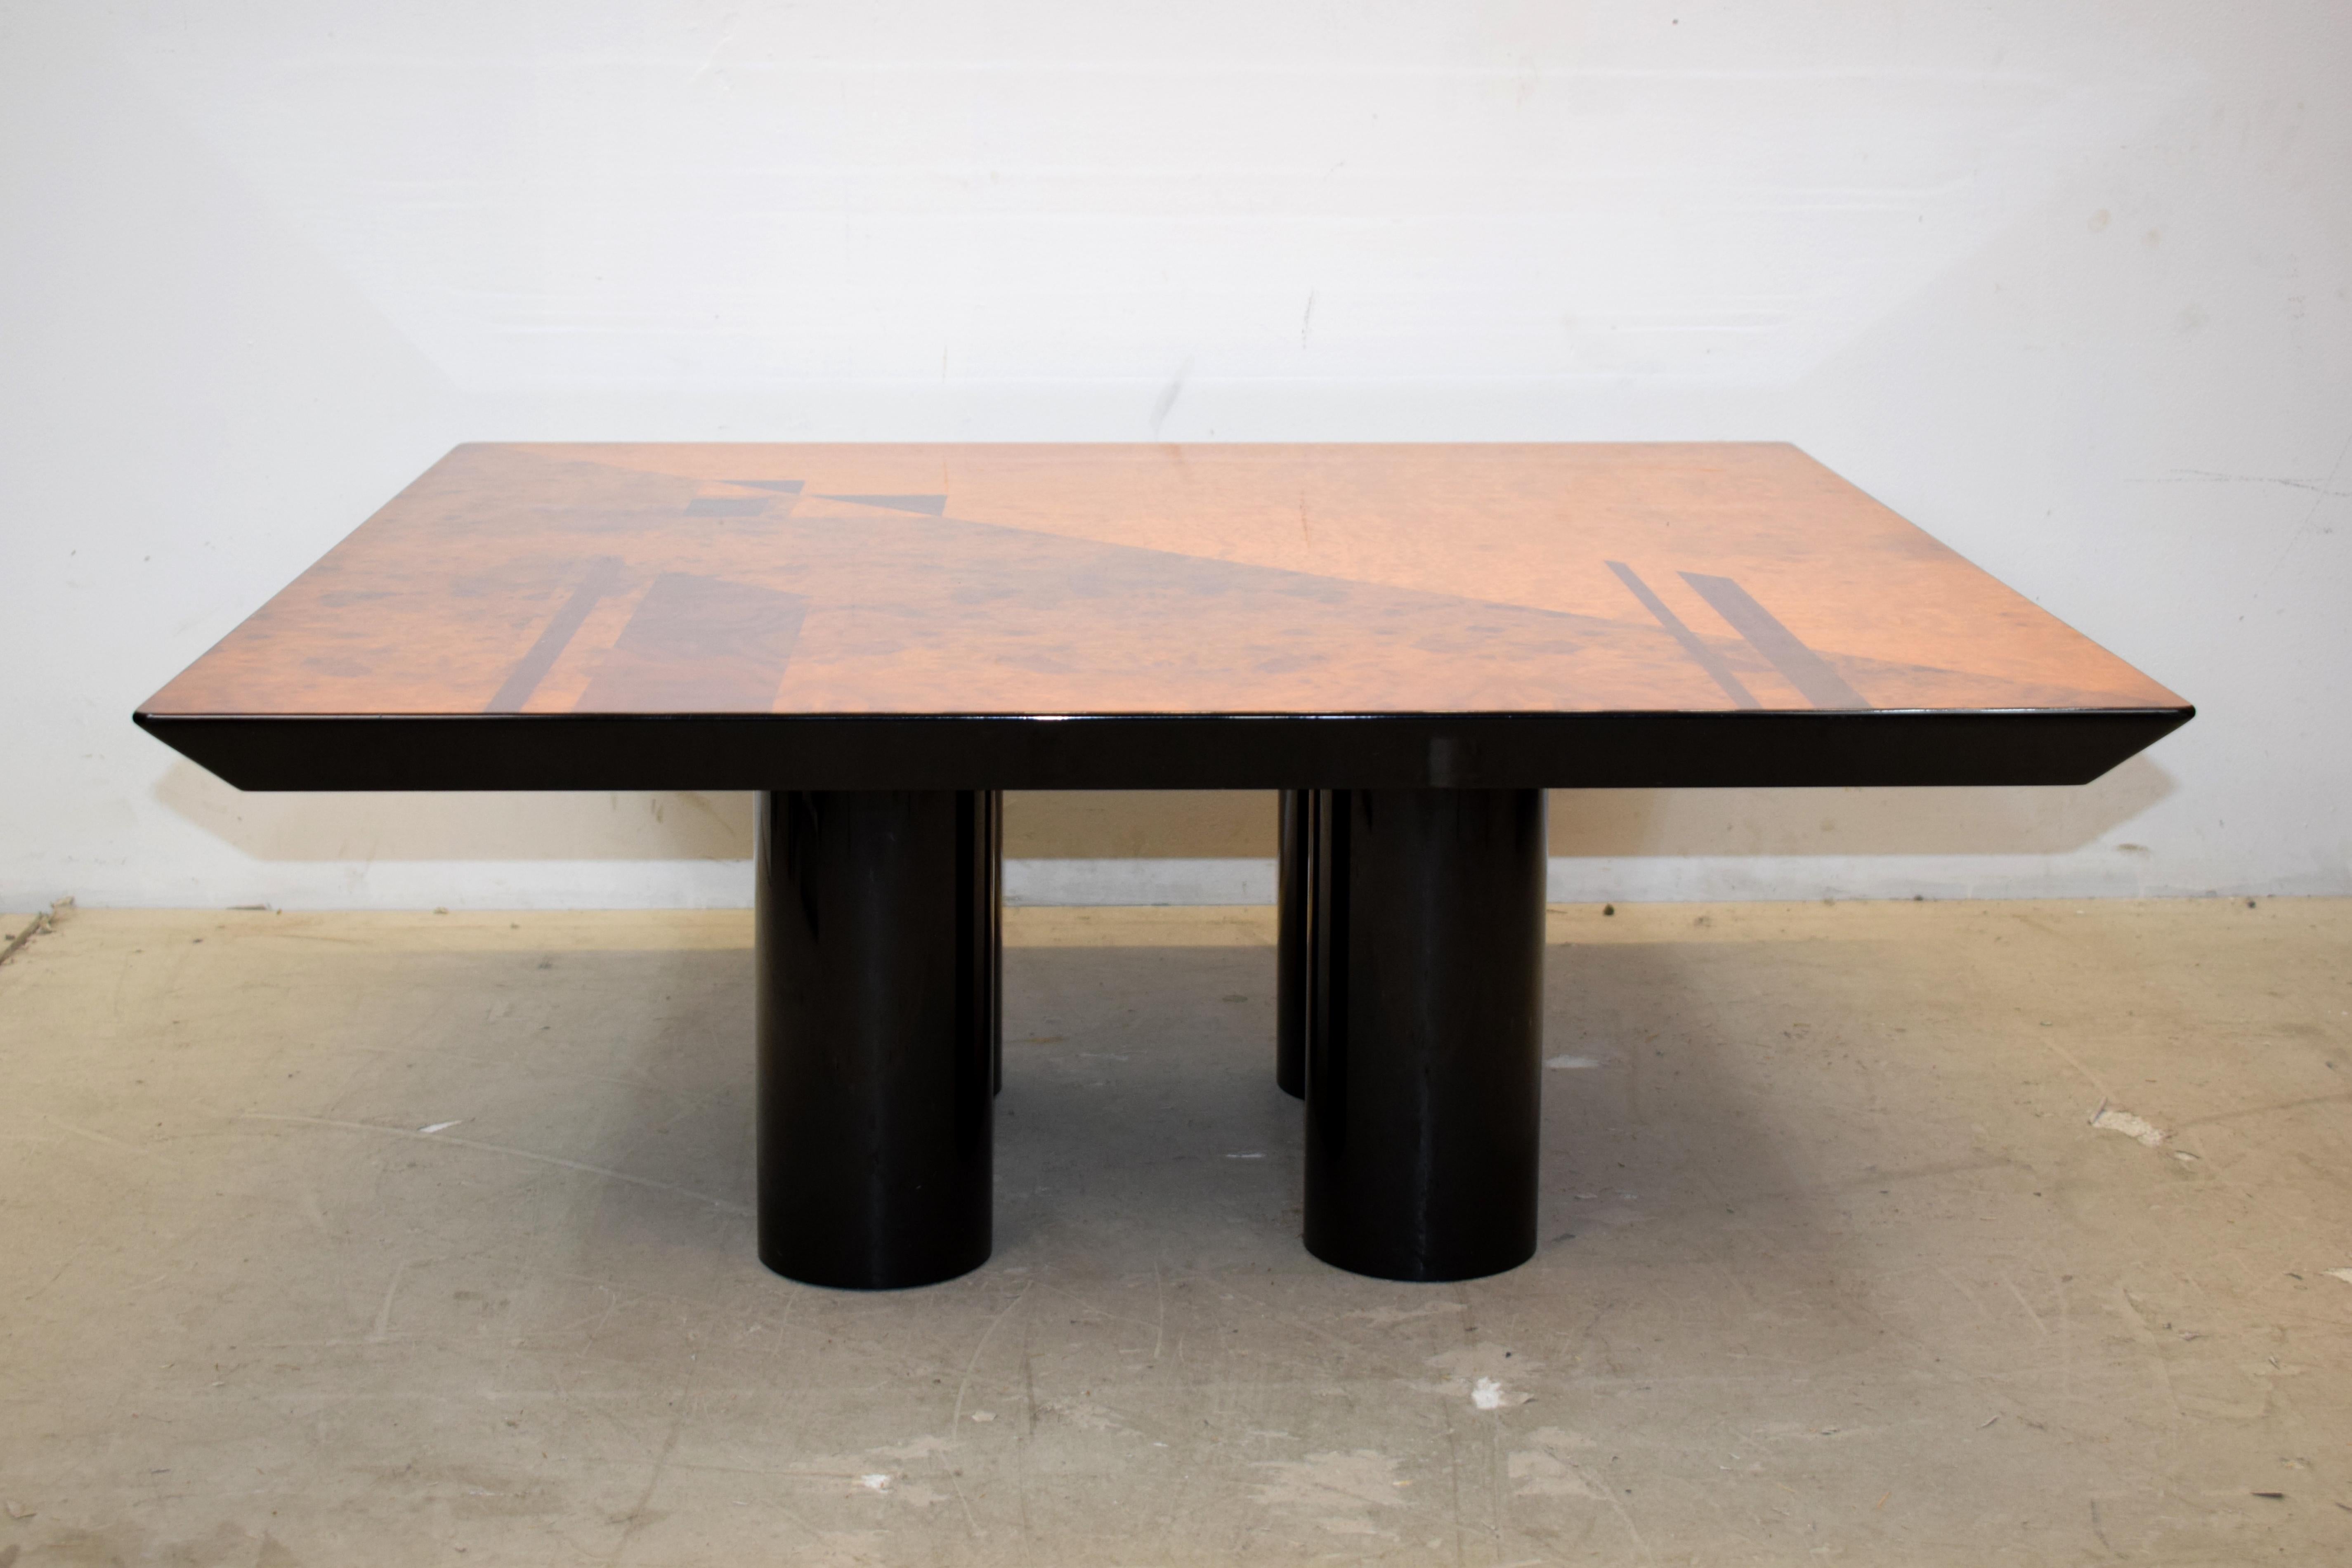 Italian coffee table, 1970s.
Dimensions: H= 35 cm; W= 90 cm; D= 90 cm.